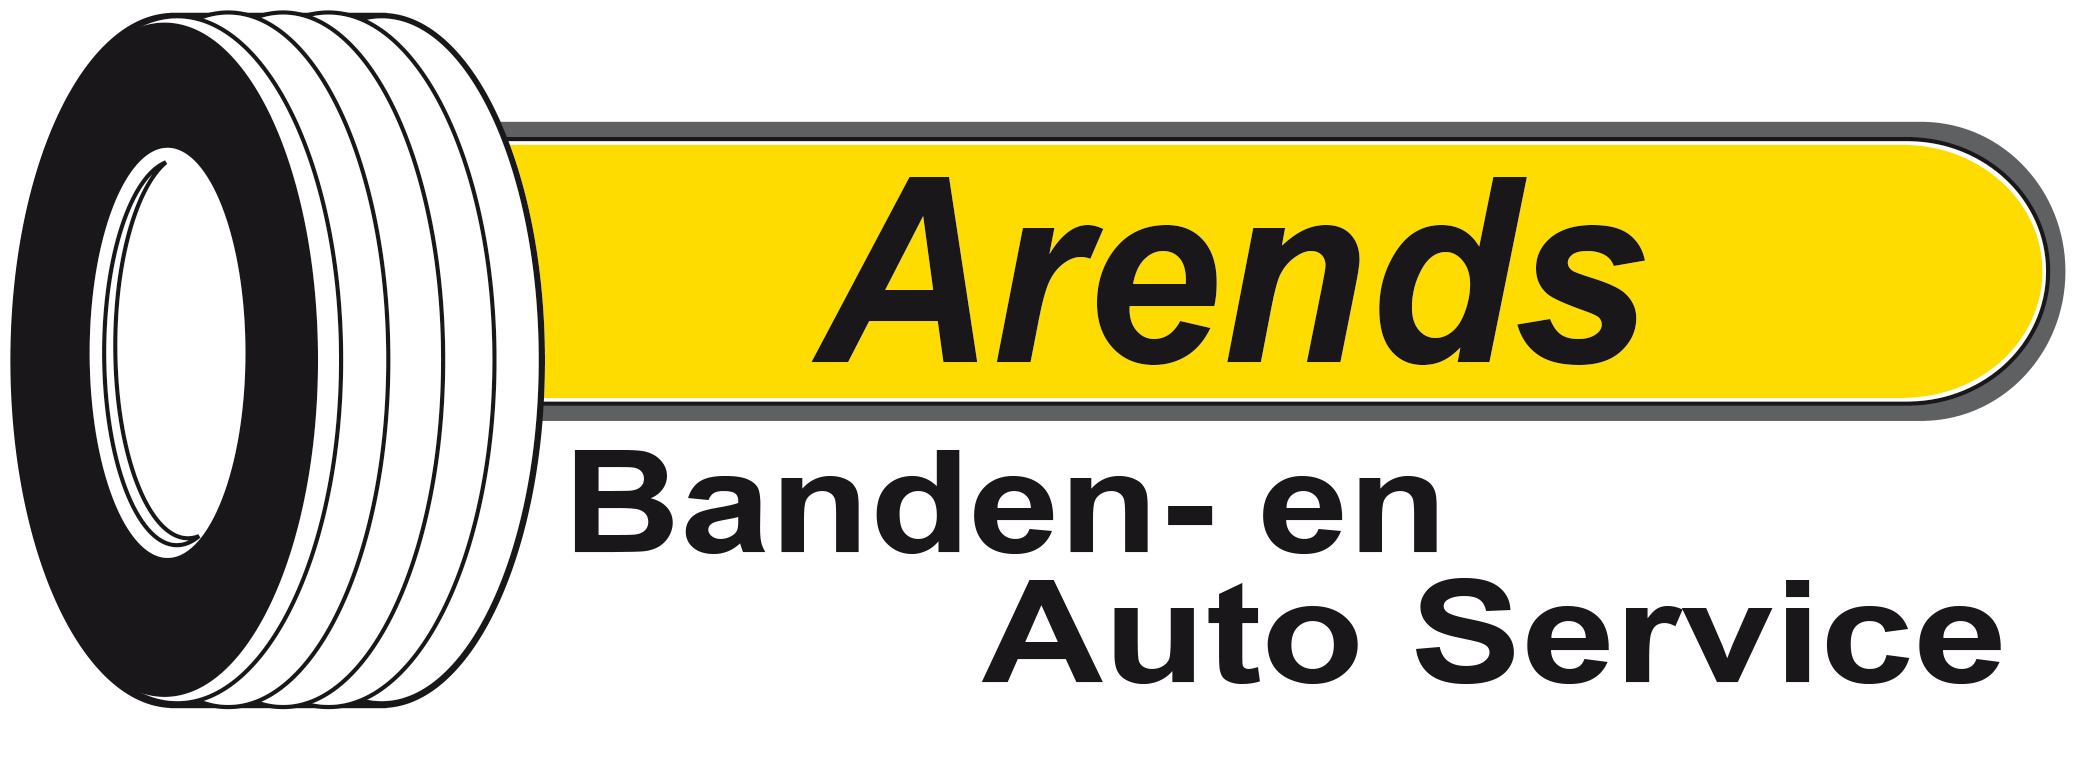 Arends Banden- en Auto Service B.V.